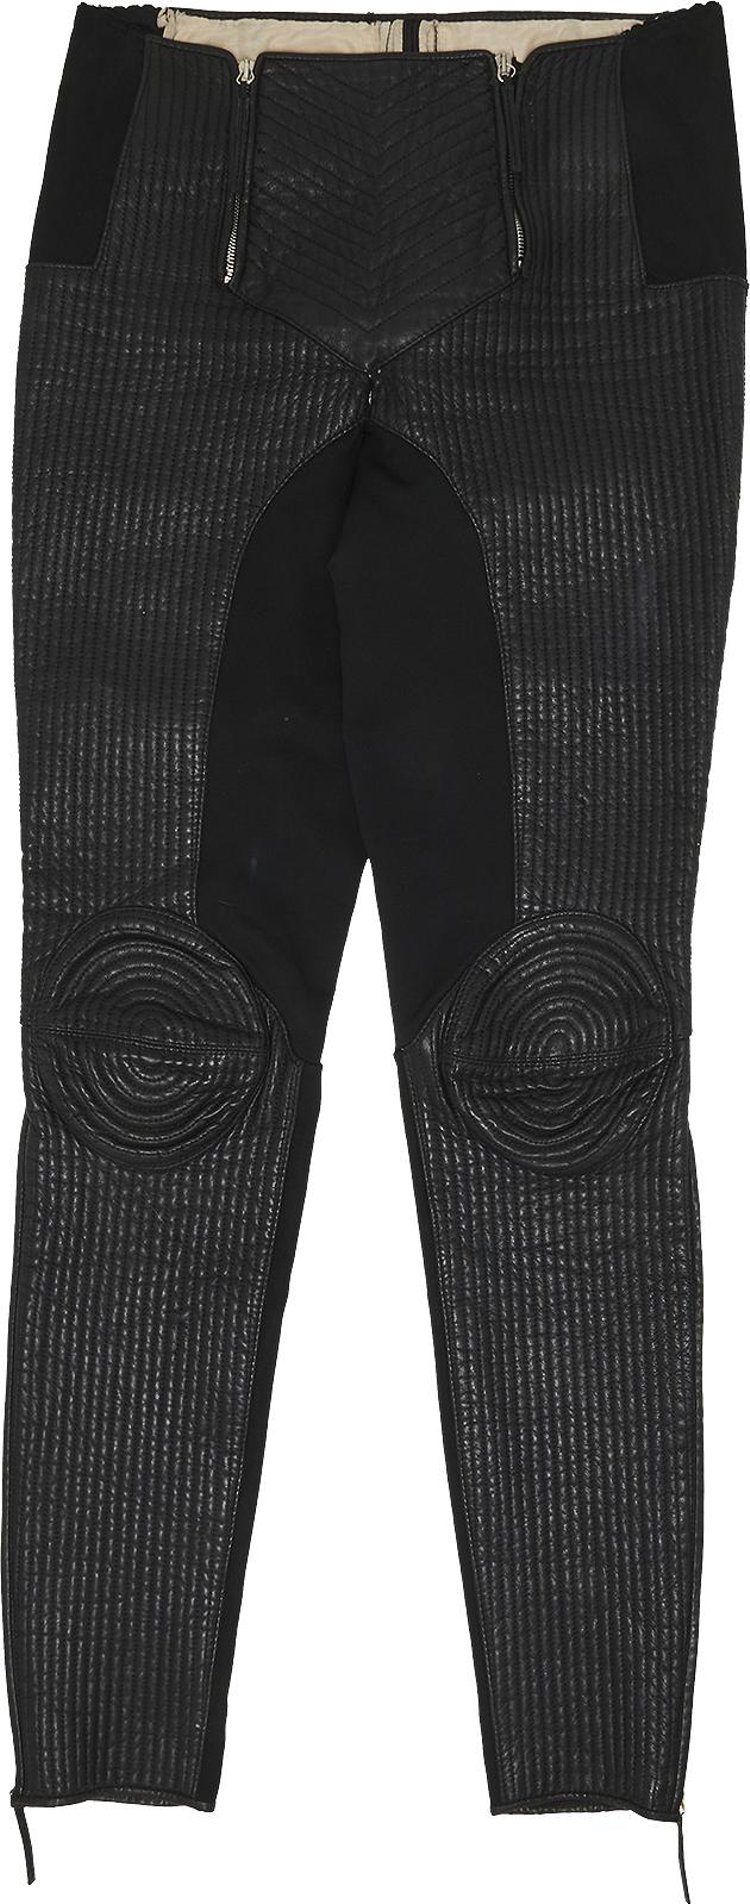 Jean Paul Gaultier Spiral Pants 'Black'